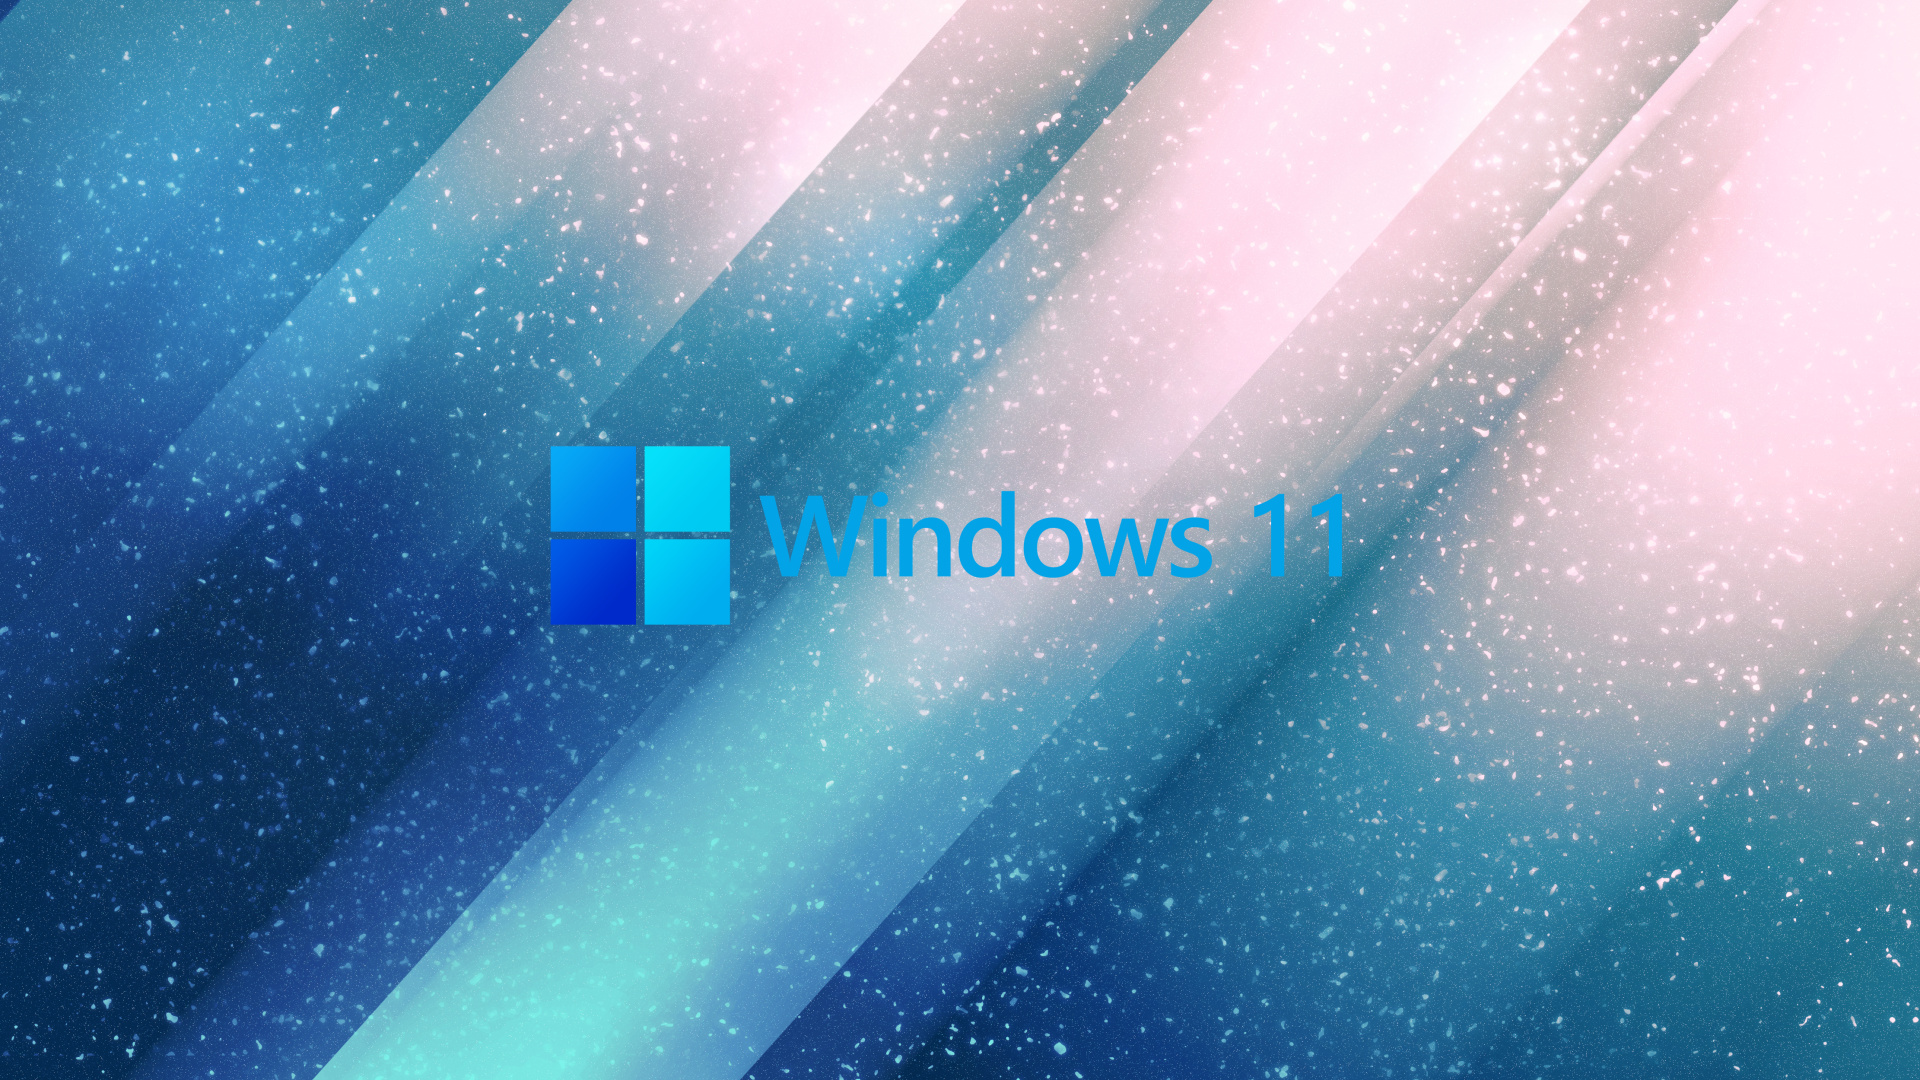 Windows 11 Wallpaper 1920x1080 Download ~ Backgrounds Idisqus Galaxy